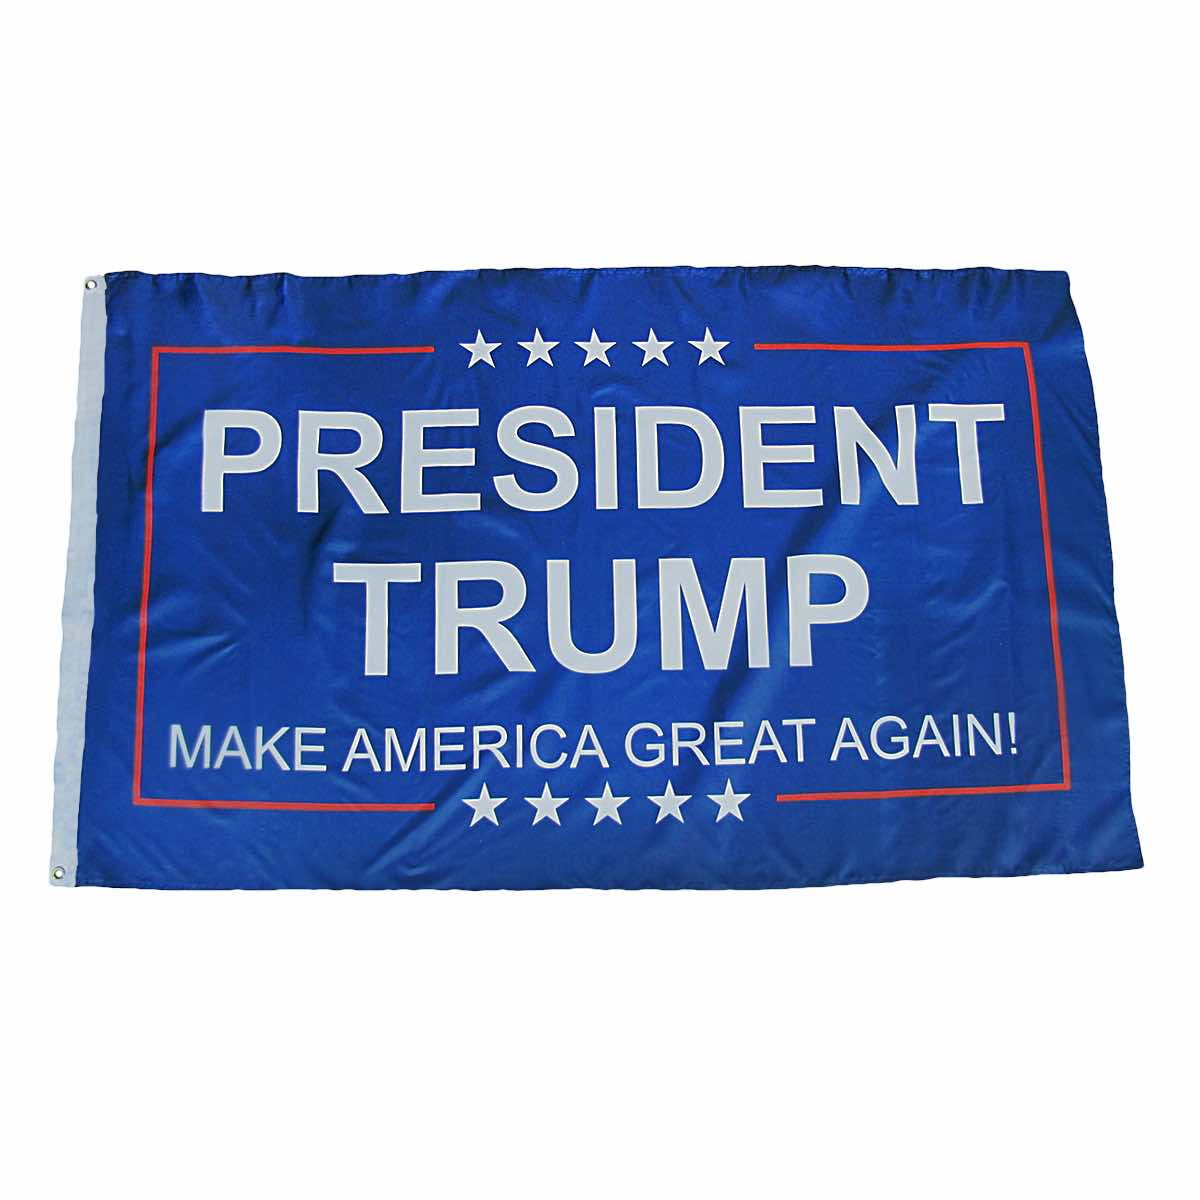 Trump 3 x 5 Foot Flag Keep America Great Again for President USA 2020 Donald J